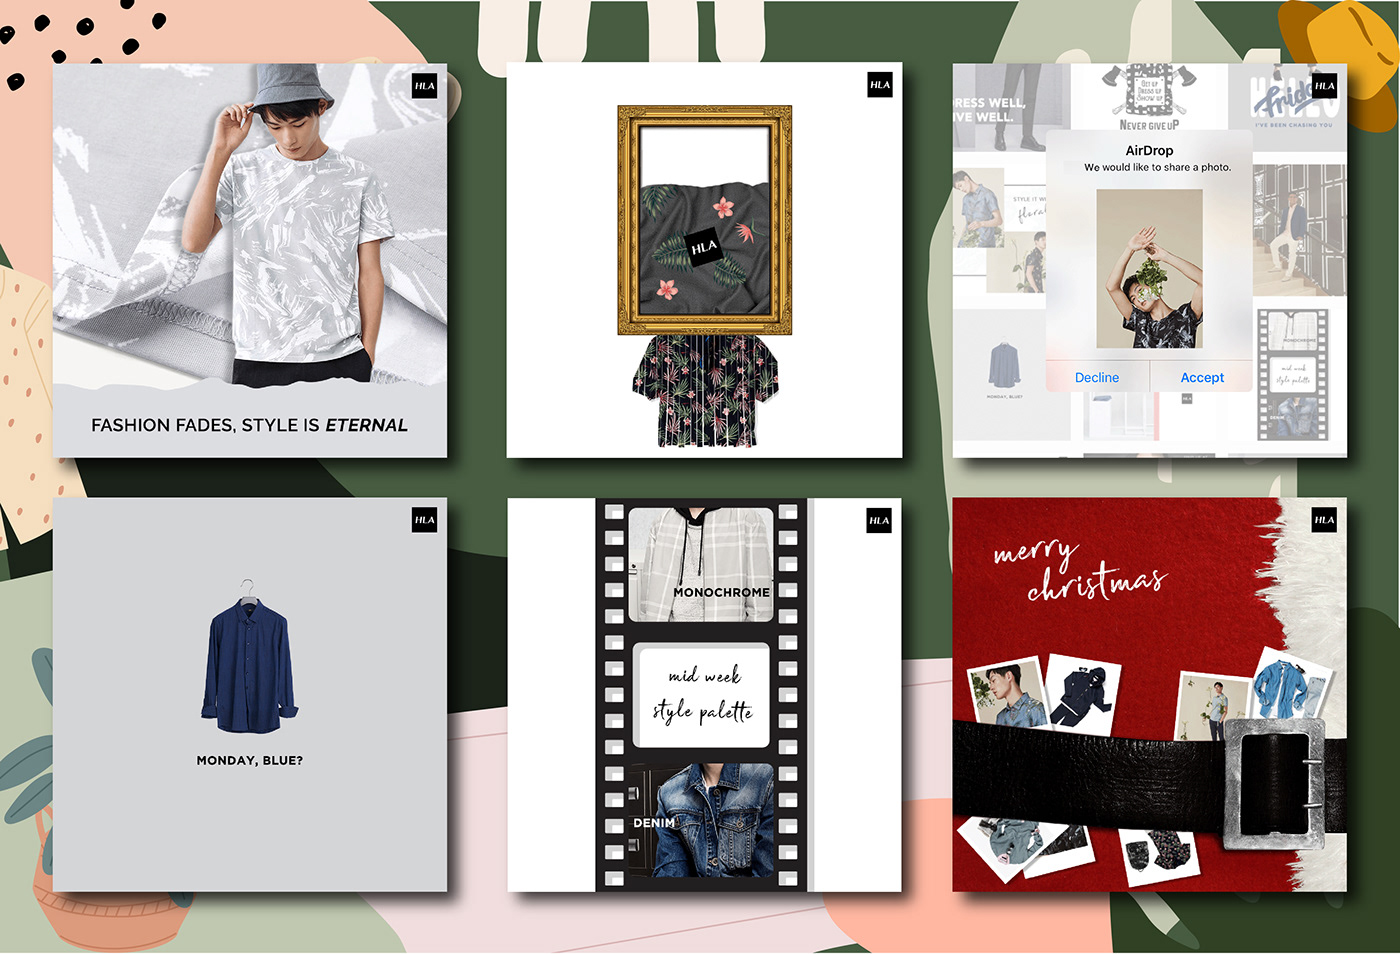 marketing   Socialmedia graphicdesign Advertising  design socialmediacontent hlasingapore clothingbrand clothes